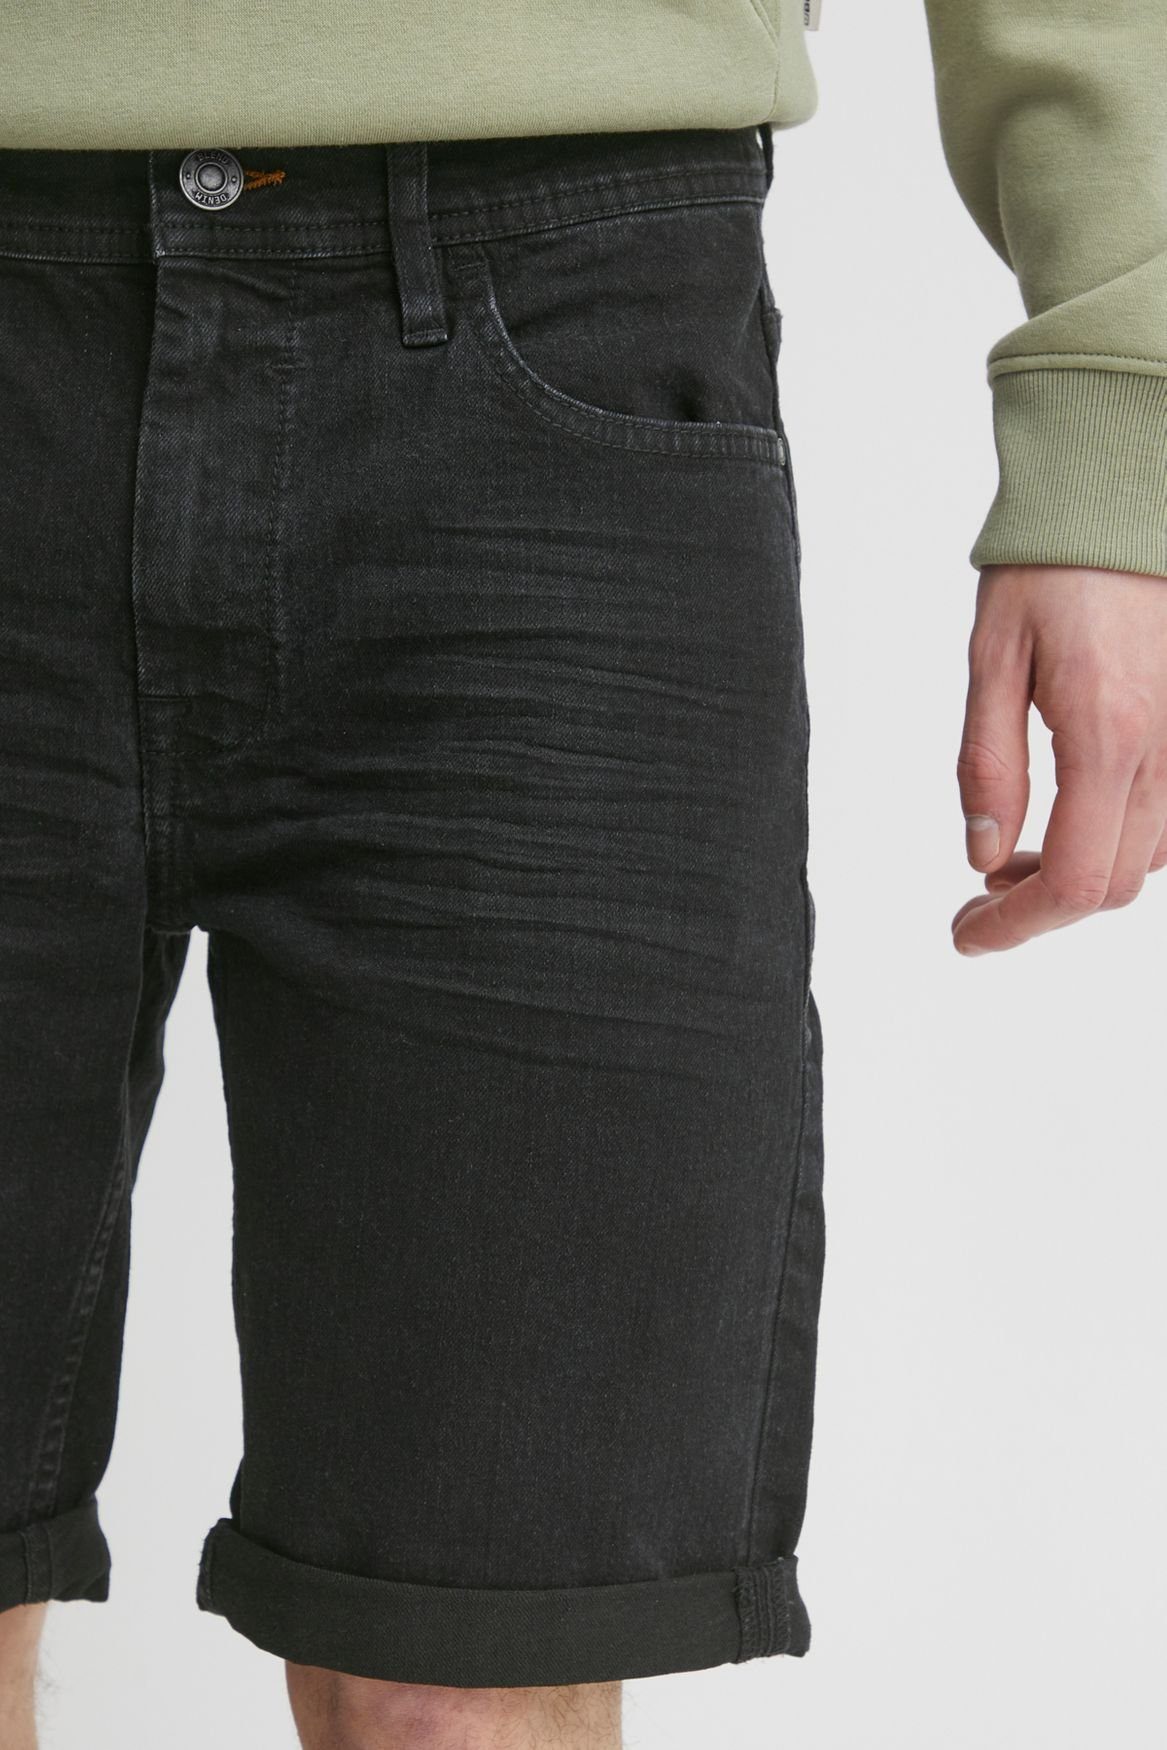 Denim Bermuda Jeans 5087 Jeansshorts Schwarz Blend in Hose 3/4 Capri Shorts